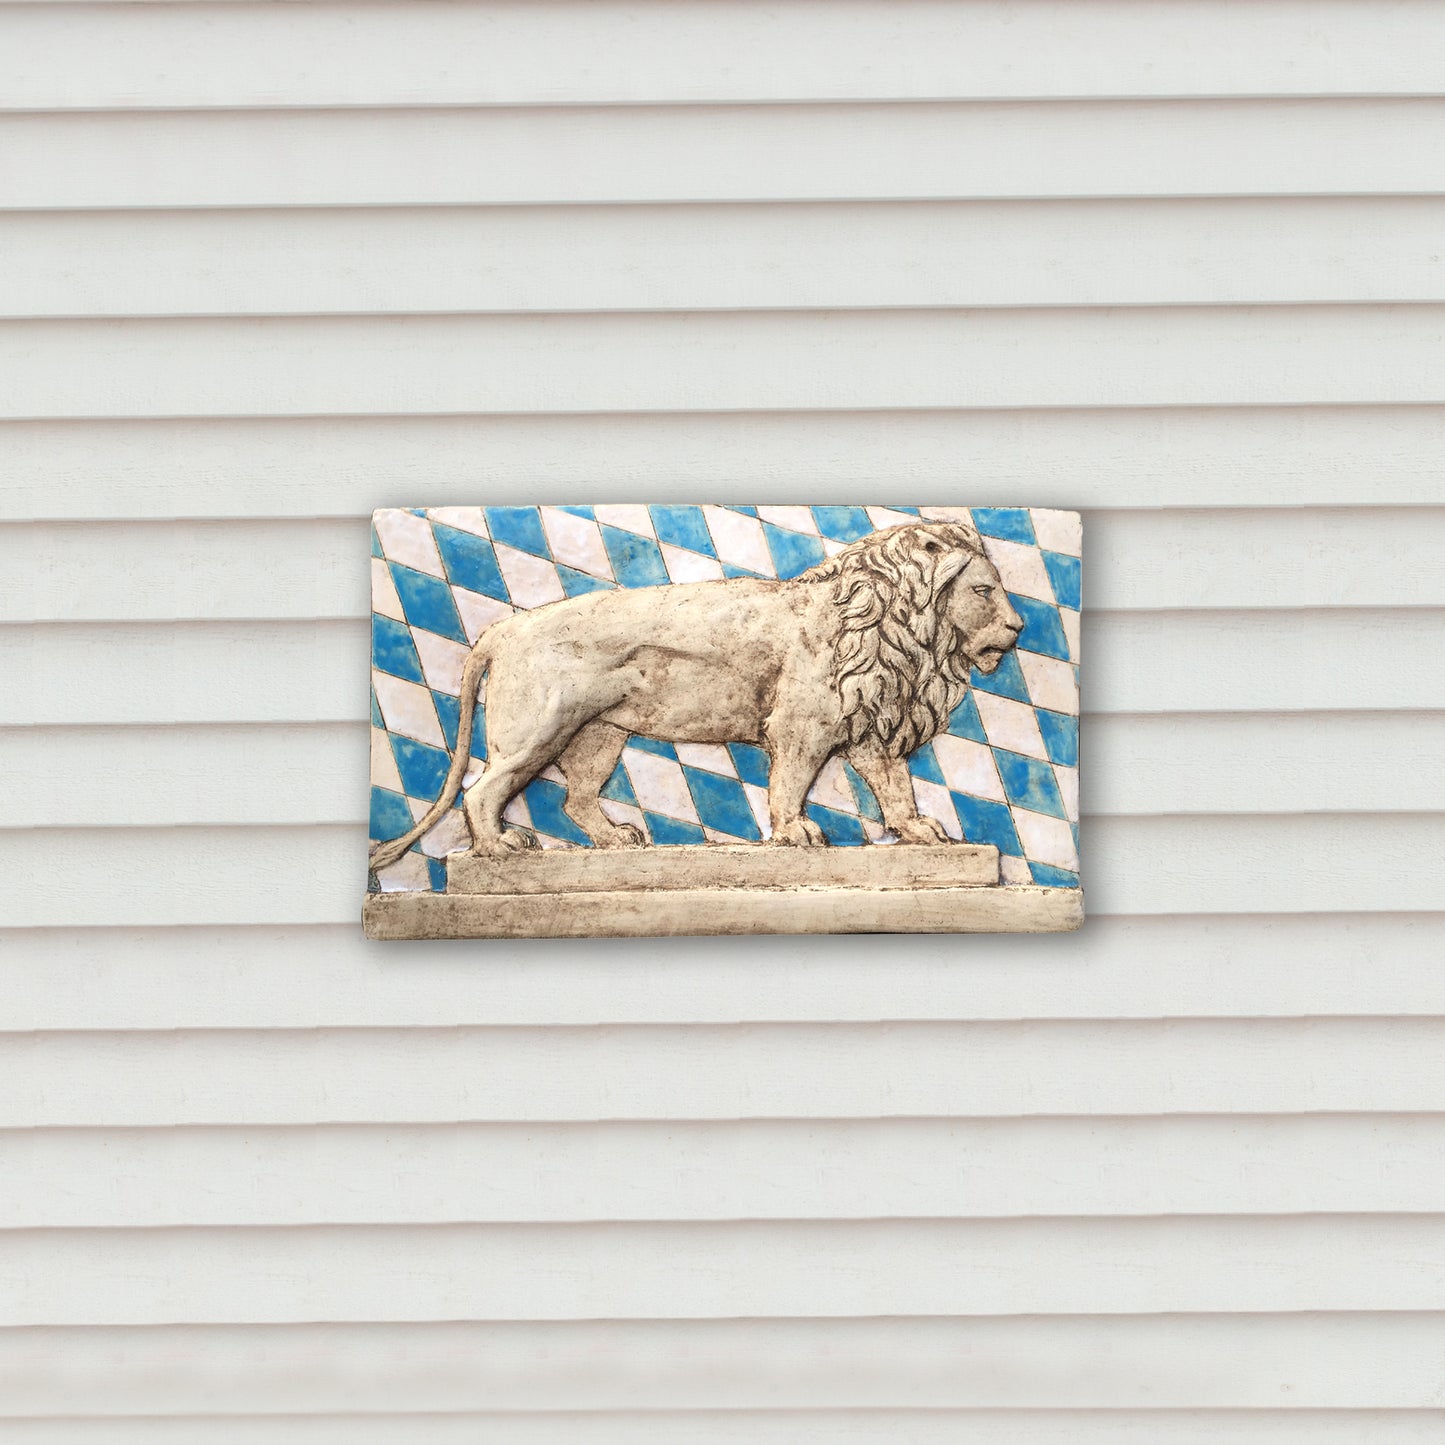 Big Bavarian lion, painted with glazes